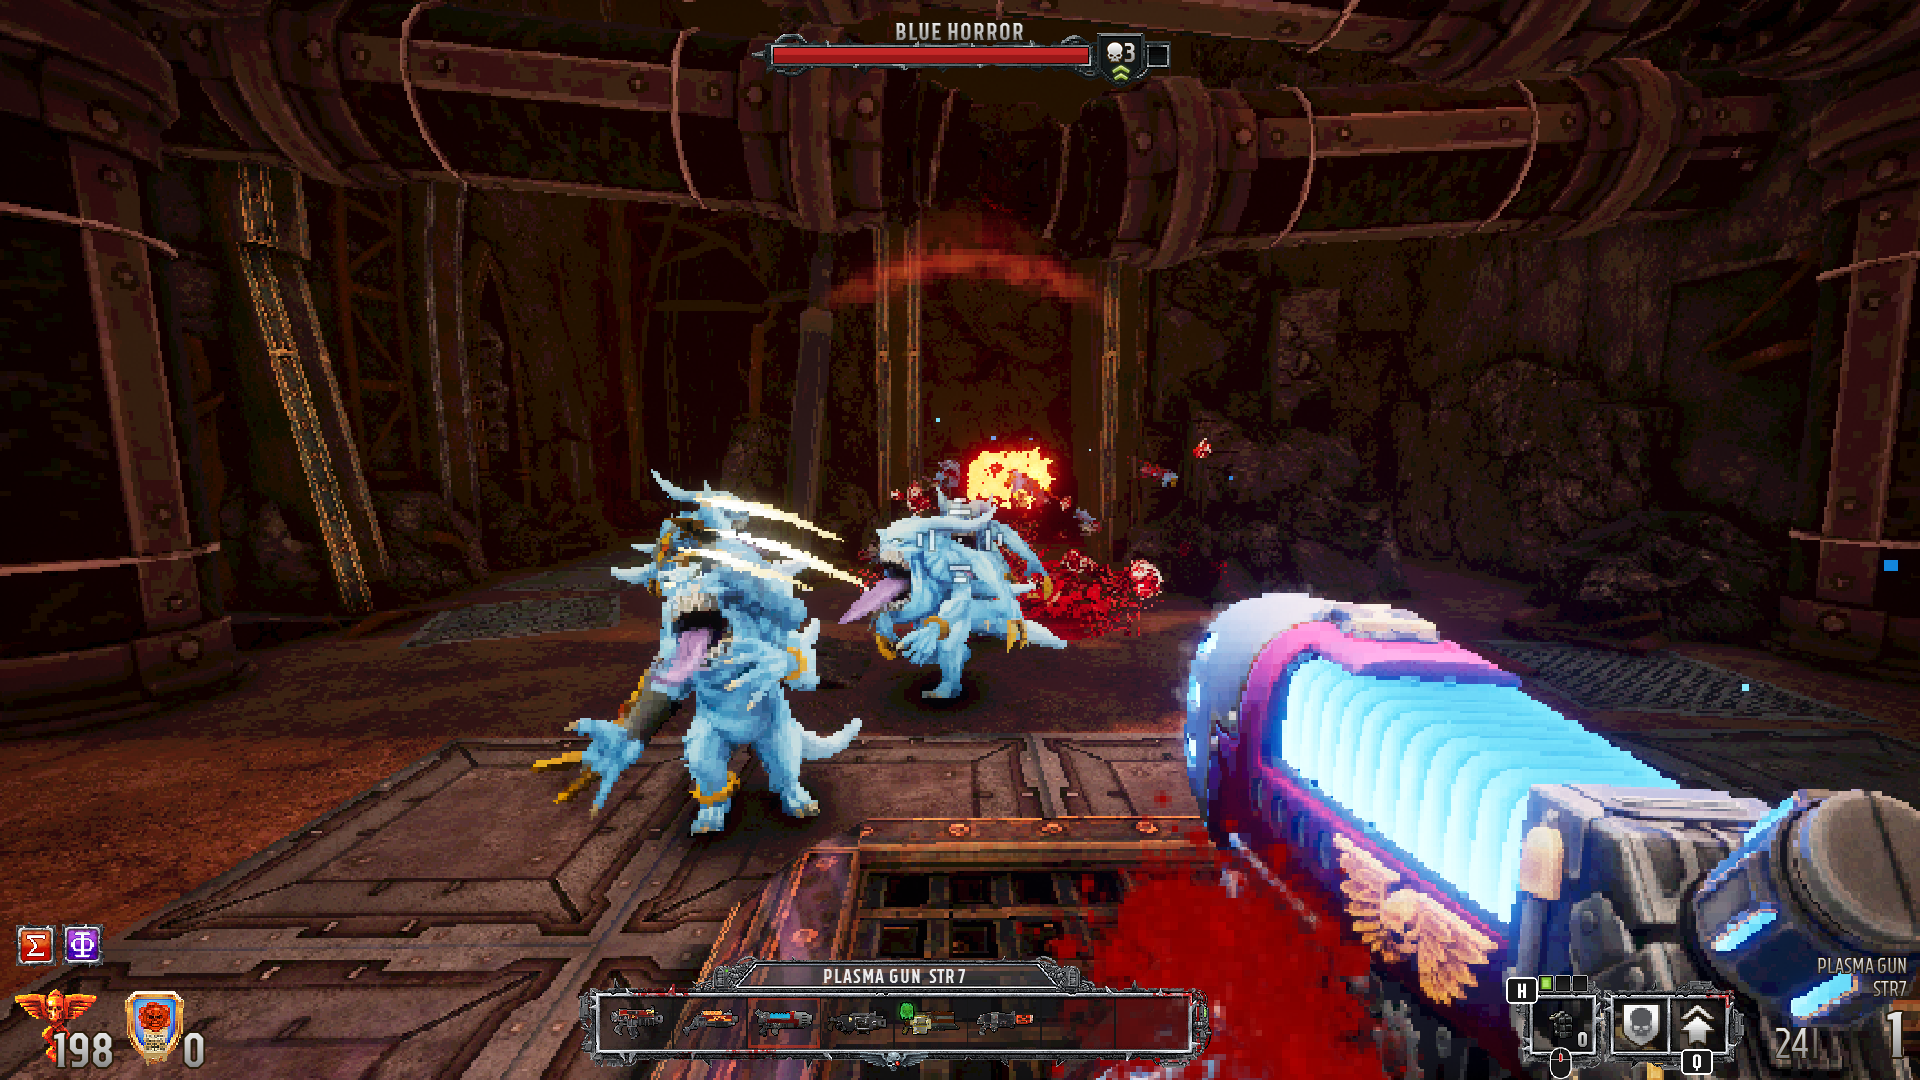 Warhammer 40K: Boltgun